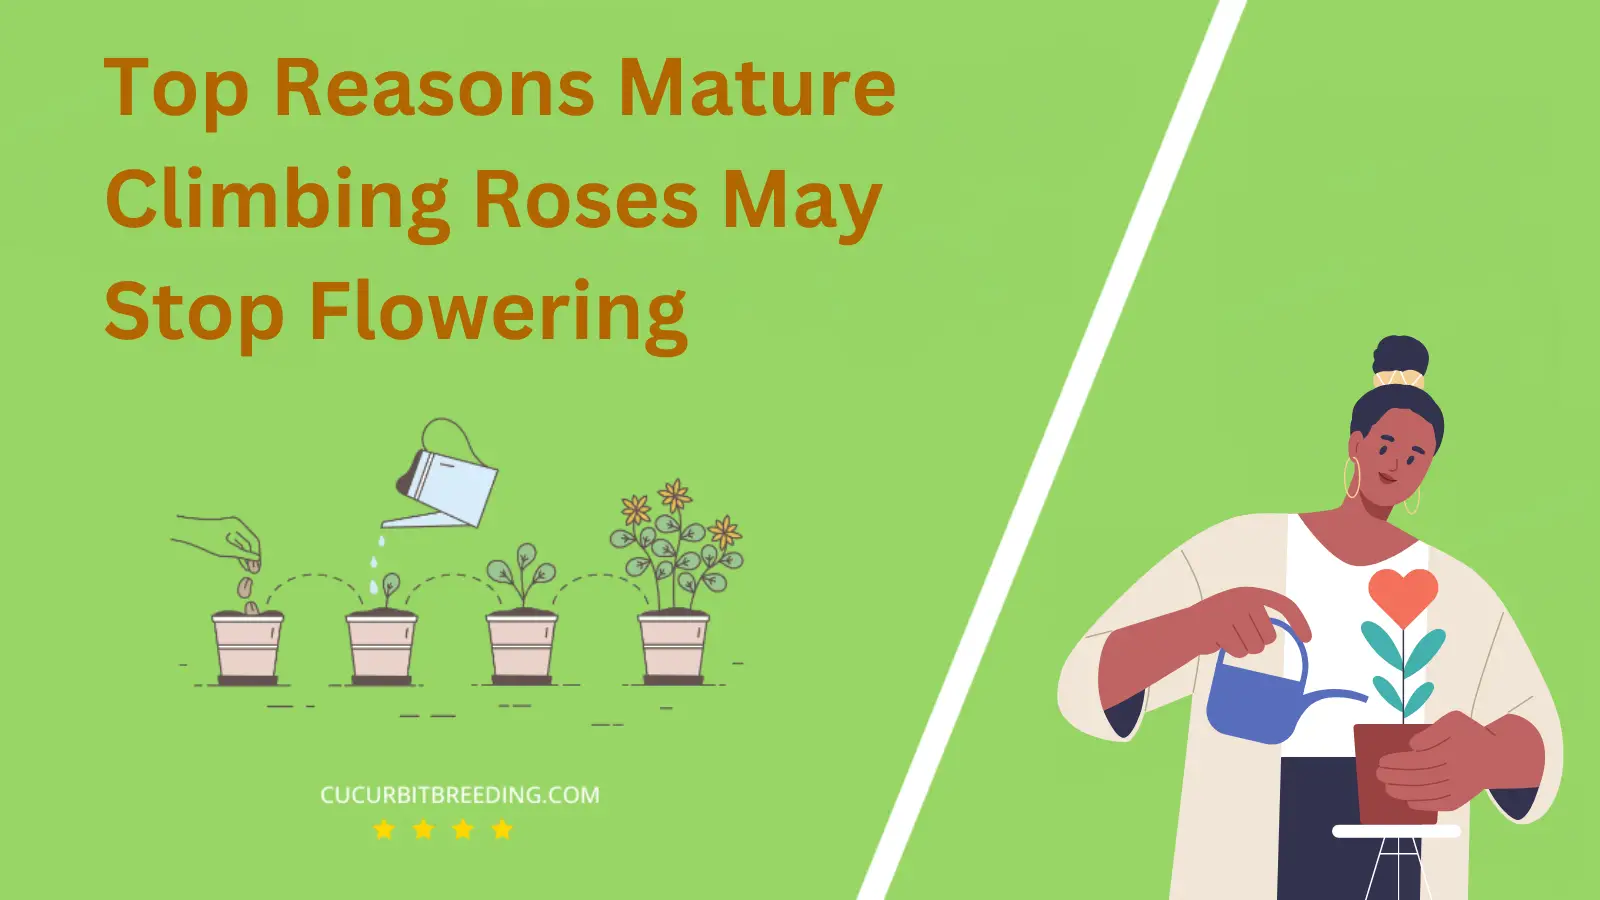 Top Reasons Mature Climbing Roses May Stop Flowering